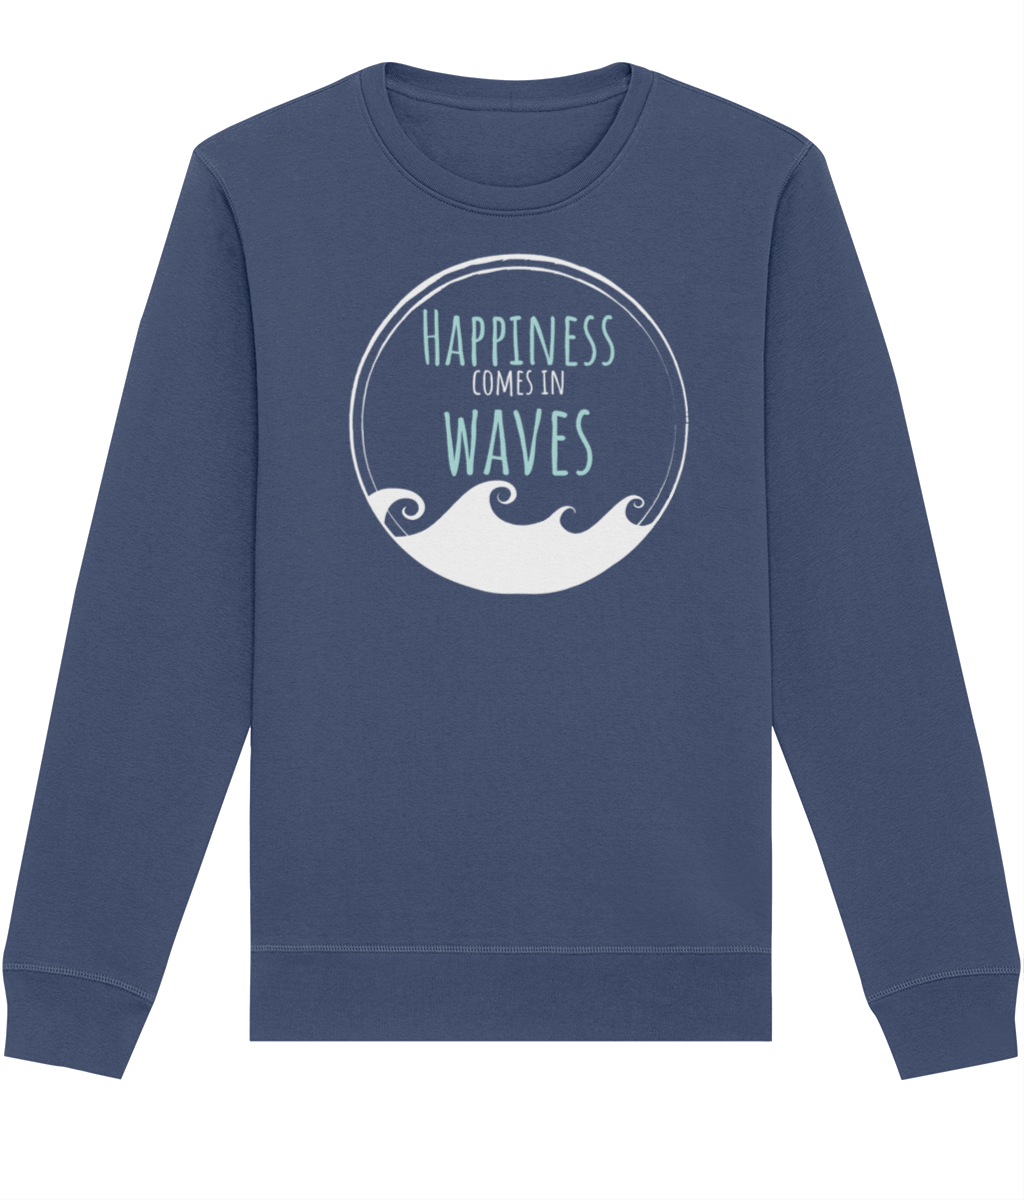 Happiness Comes in Waves Organic Cotton Sweatshirt